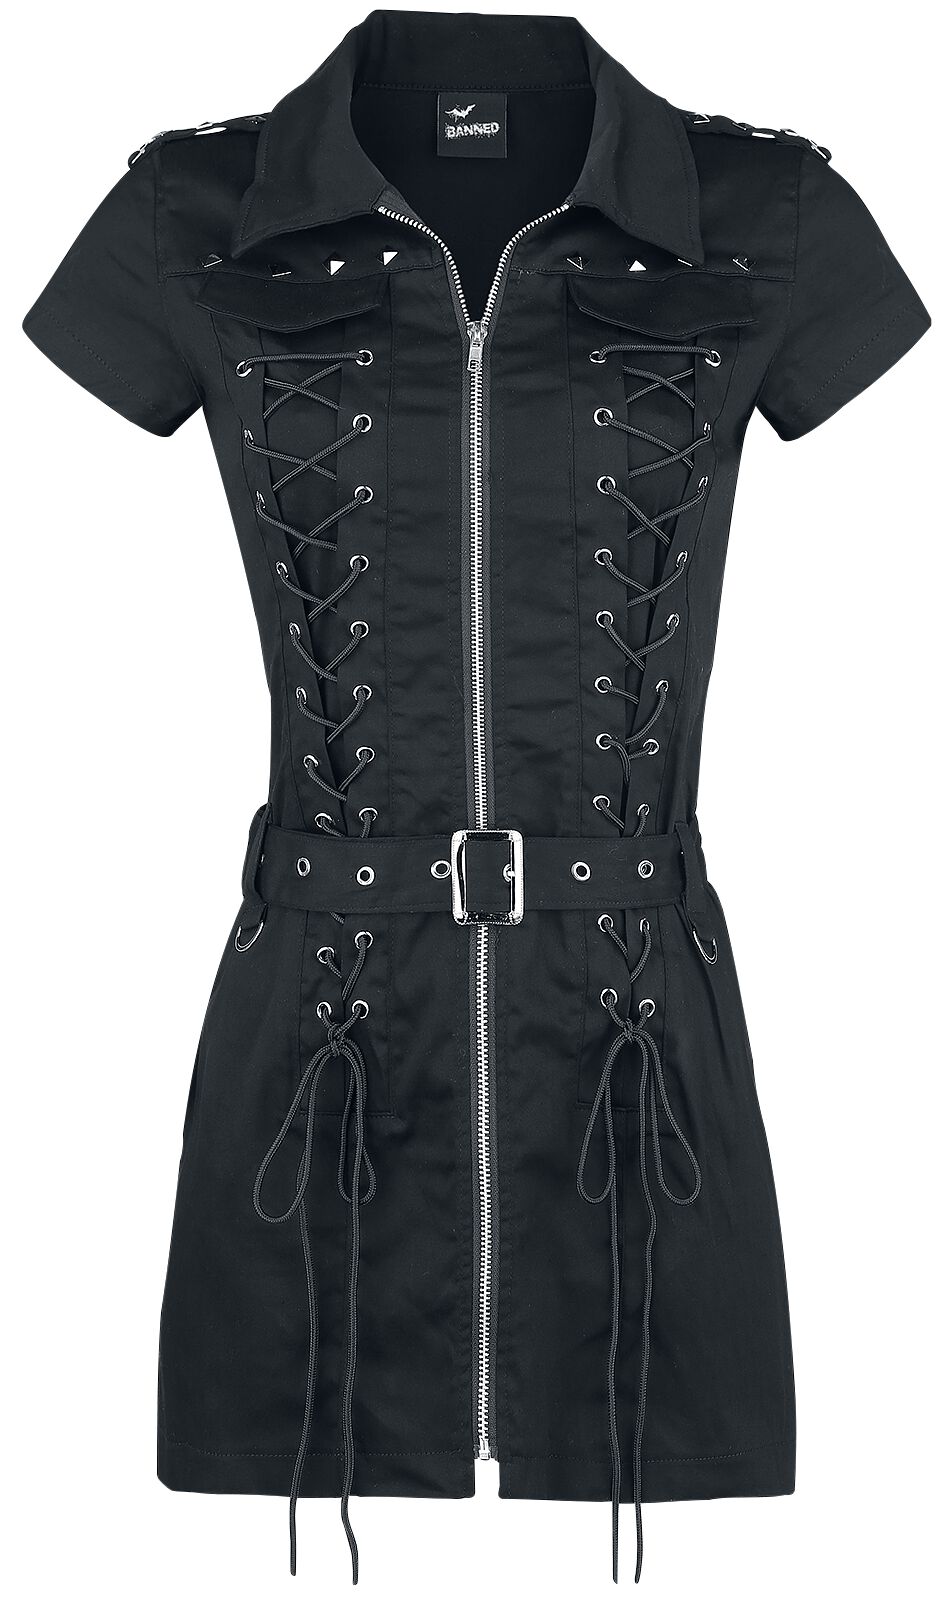 Banned Alternative Mod Dress Kurzes Kleid schwarz in XL